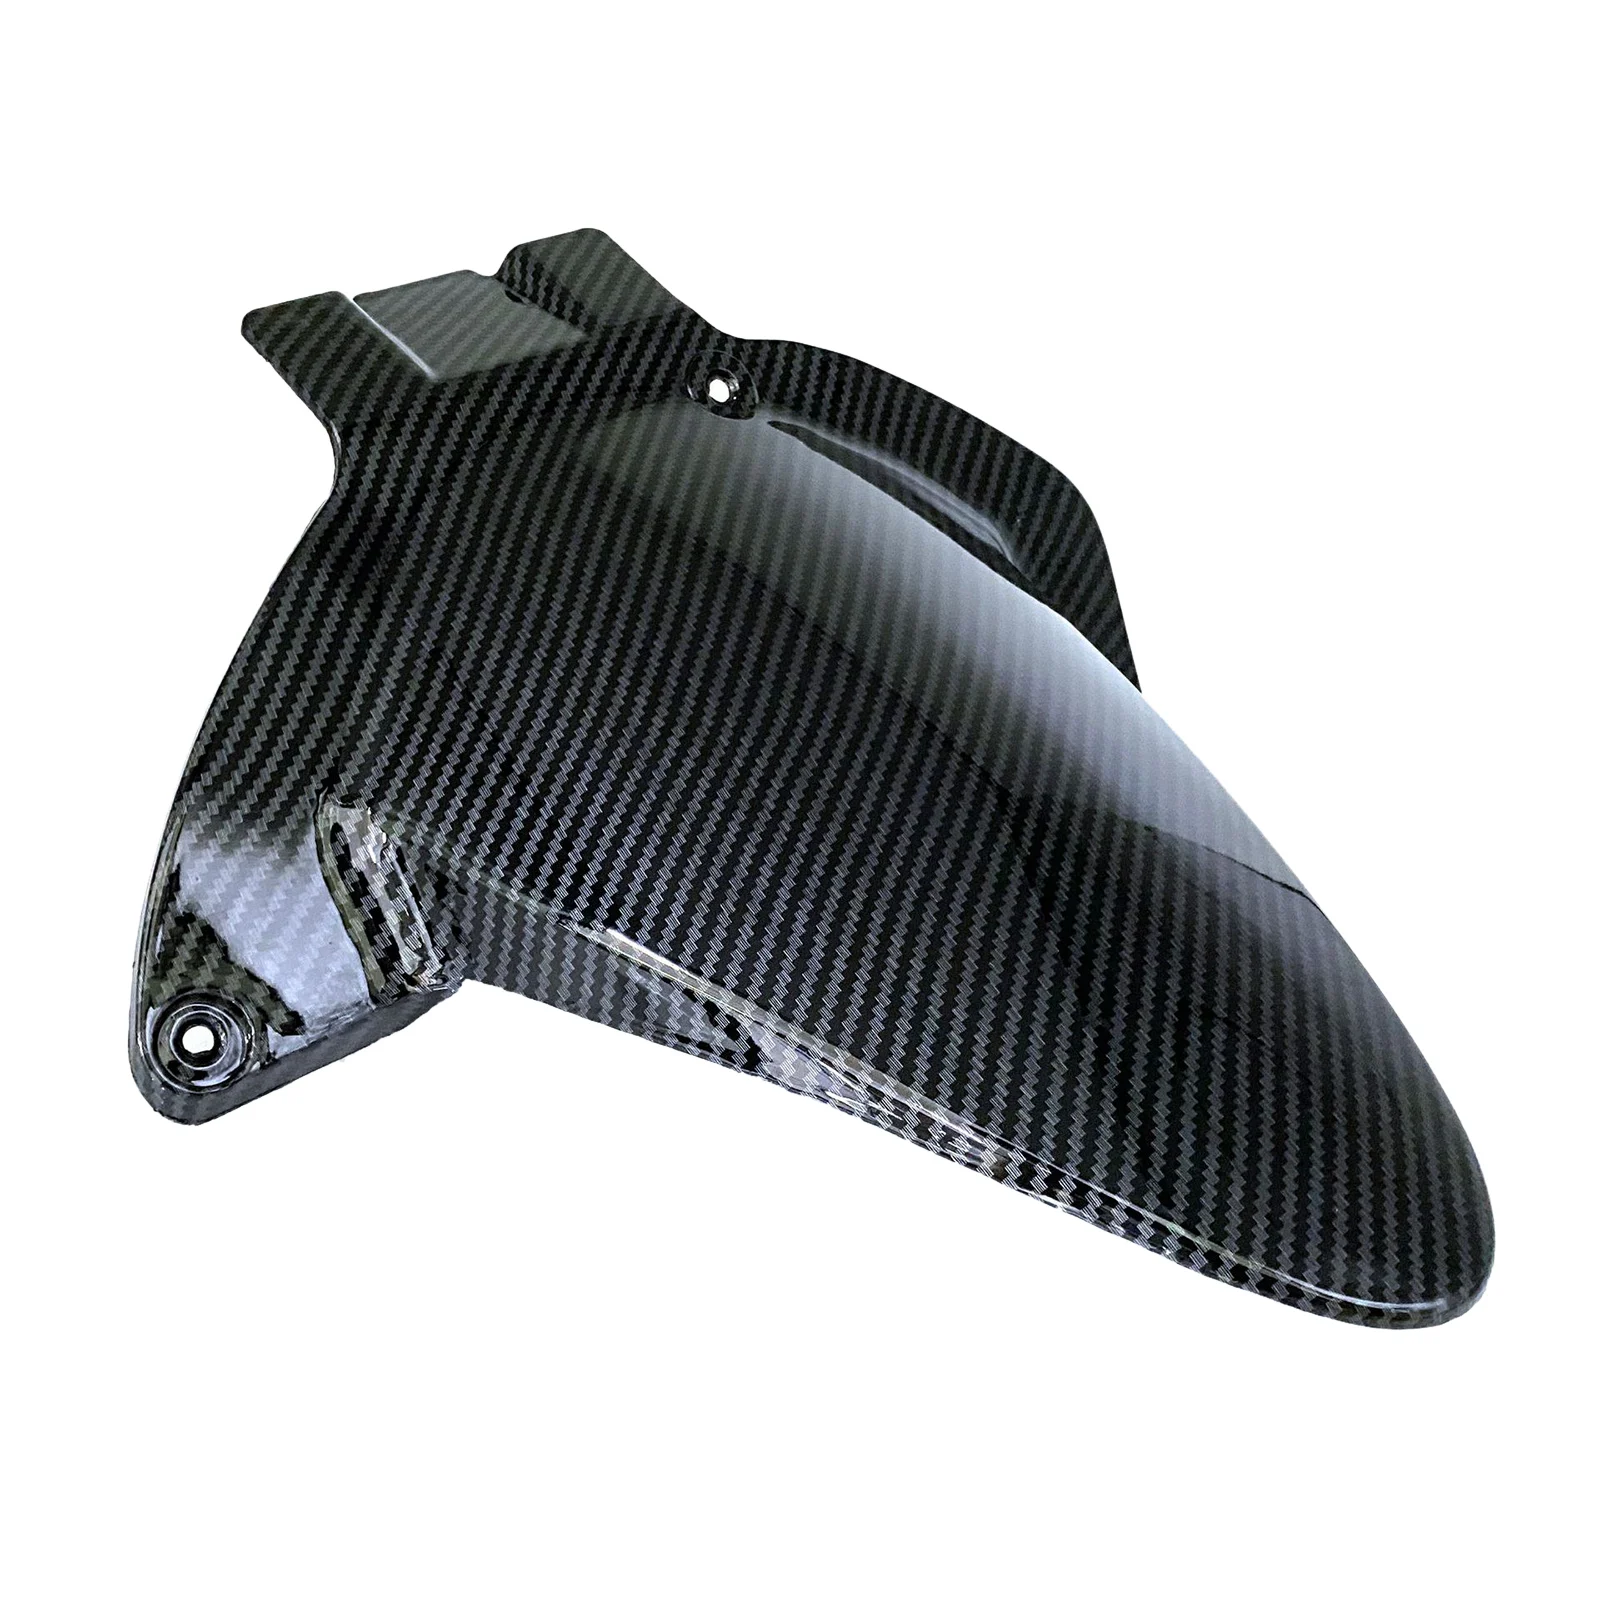 Motorcycle Rear Fender Mudguard Carbon Fiber Fairing Guard Accessories Fit For Honda CBR600RR CBR 600 RR 2003 2004 Models